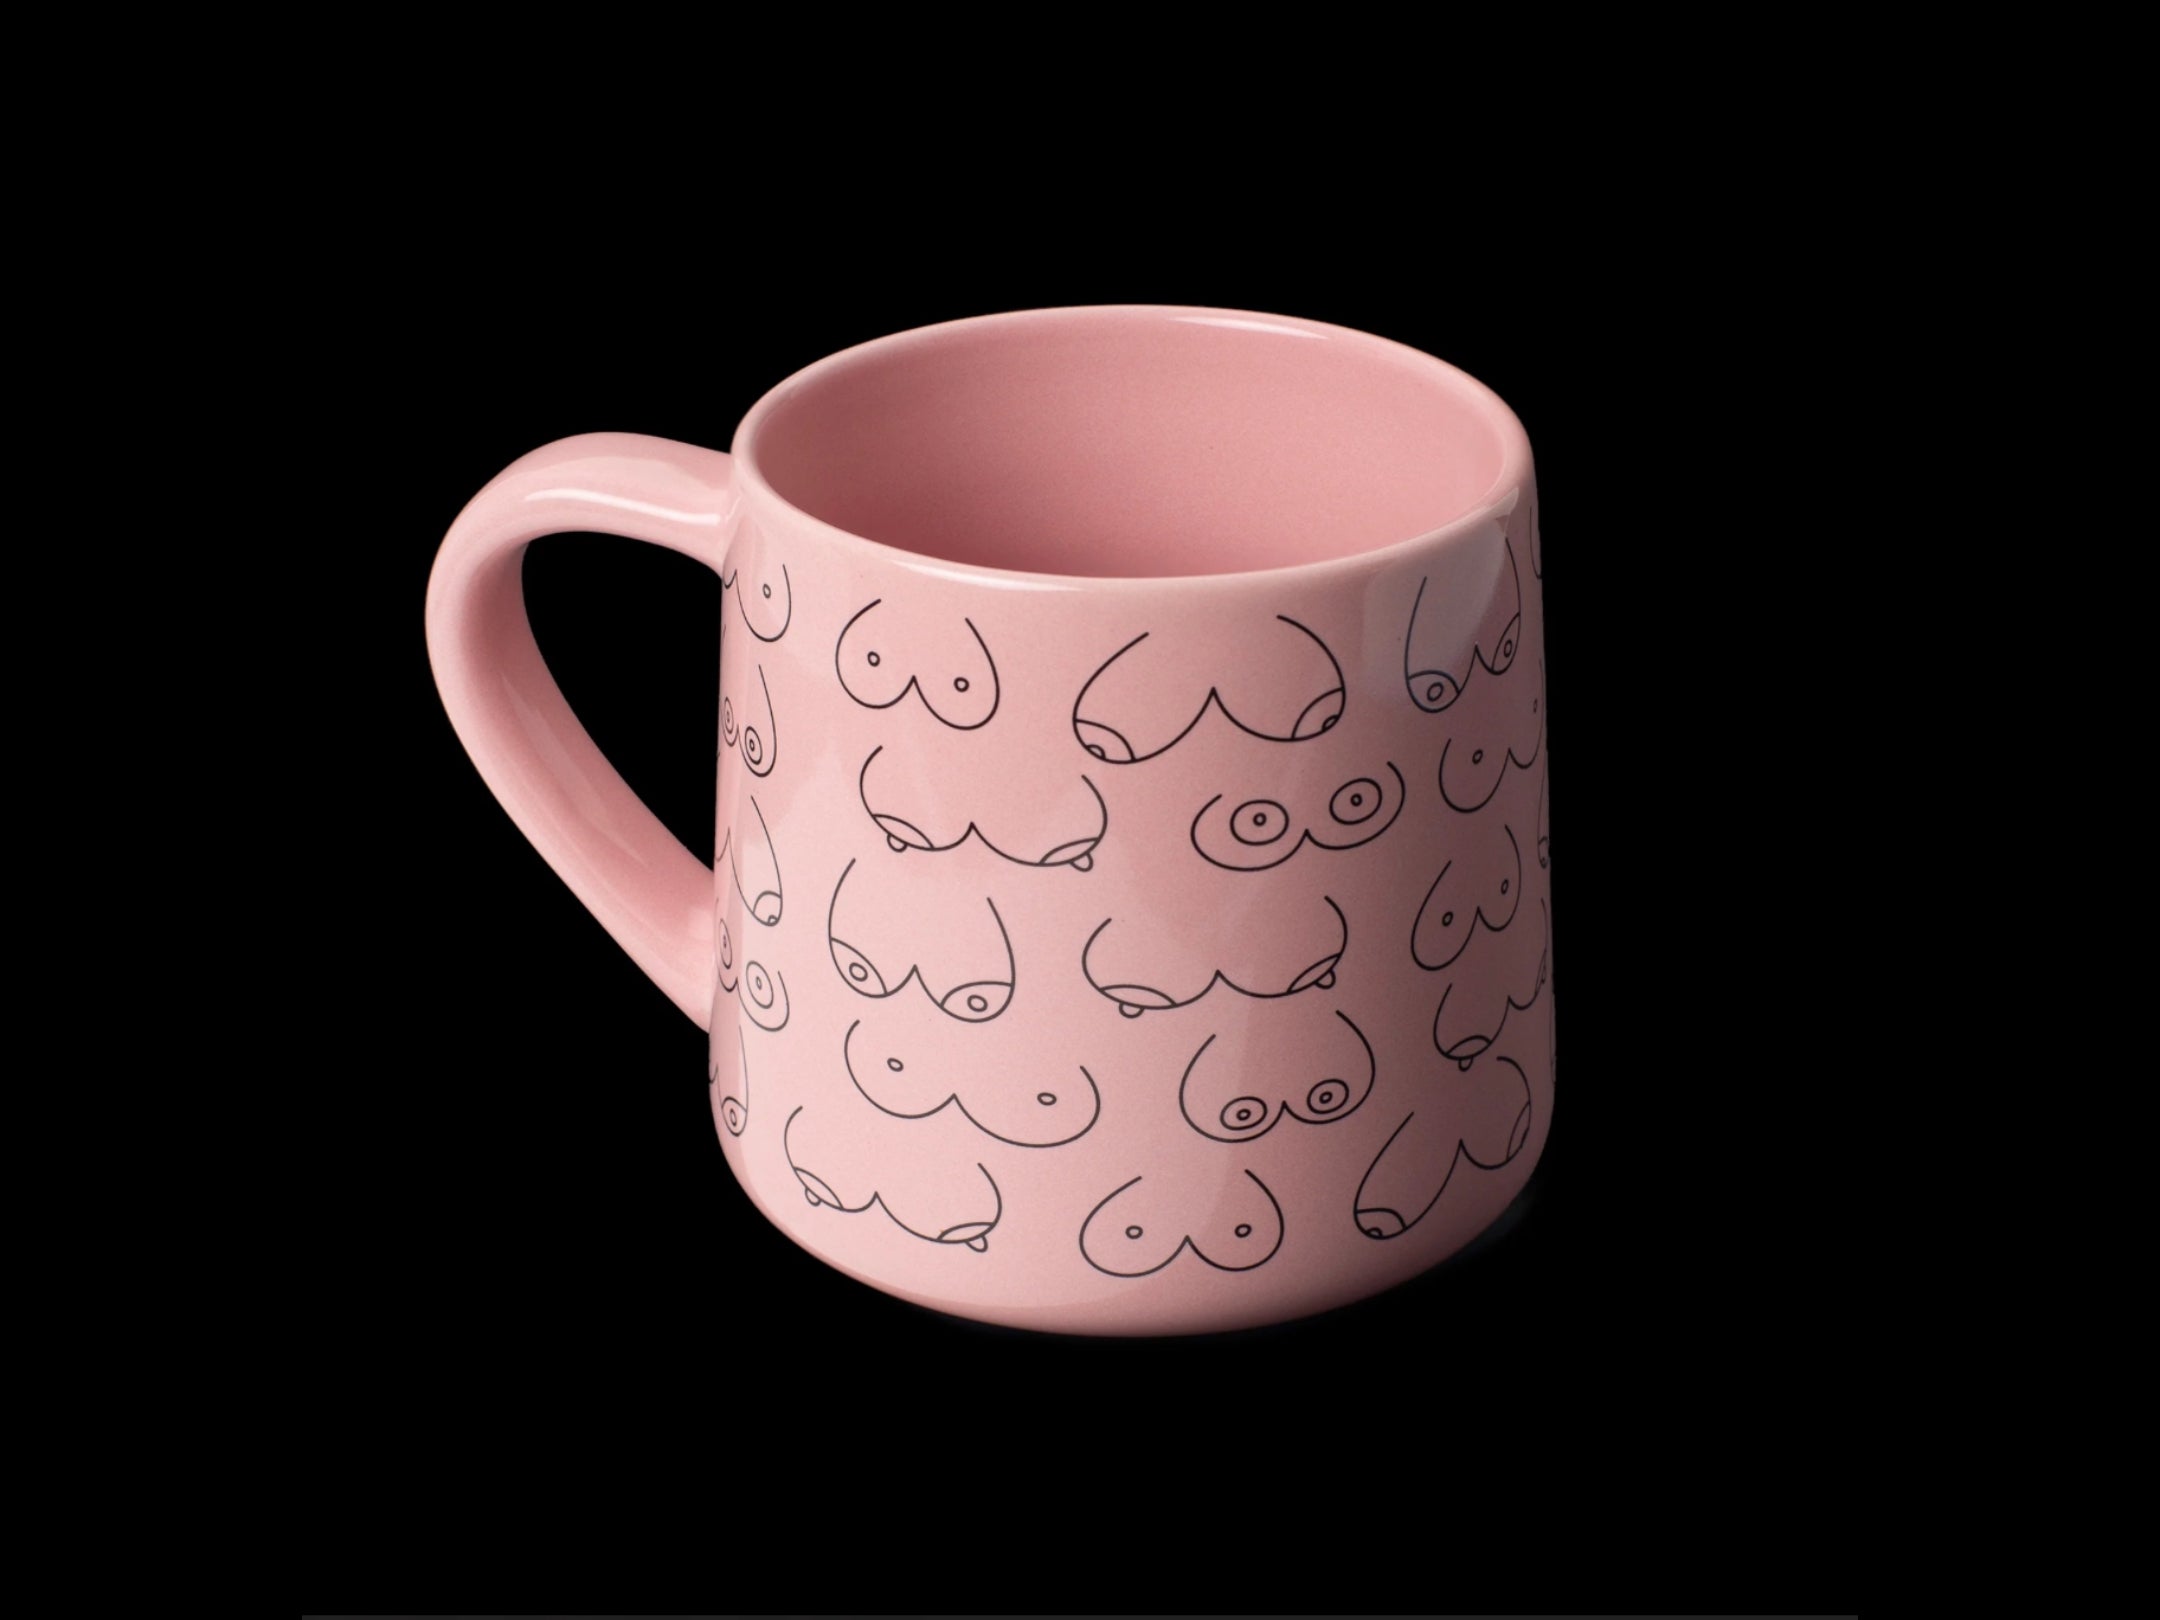 Breast Mug Ever Mug - Lighten Up Shop